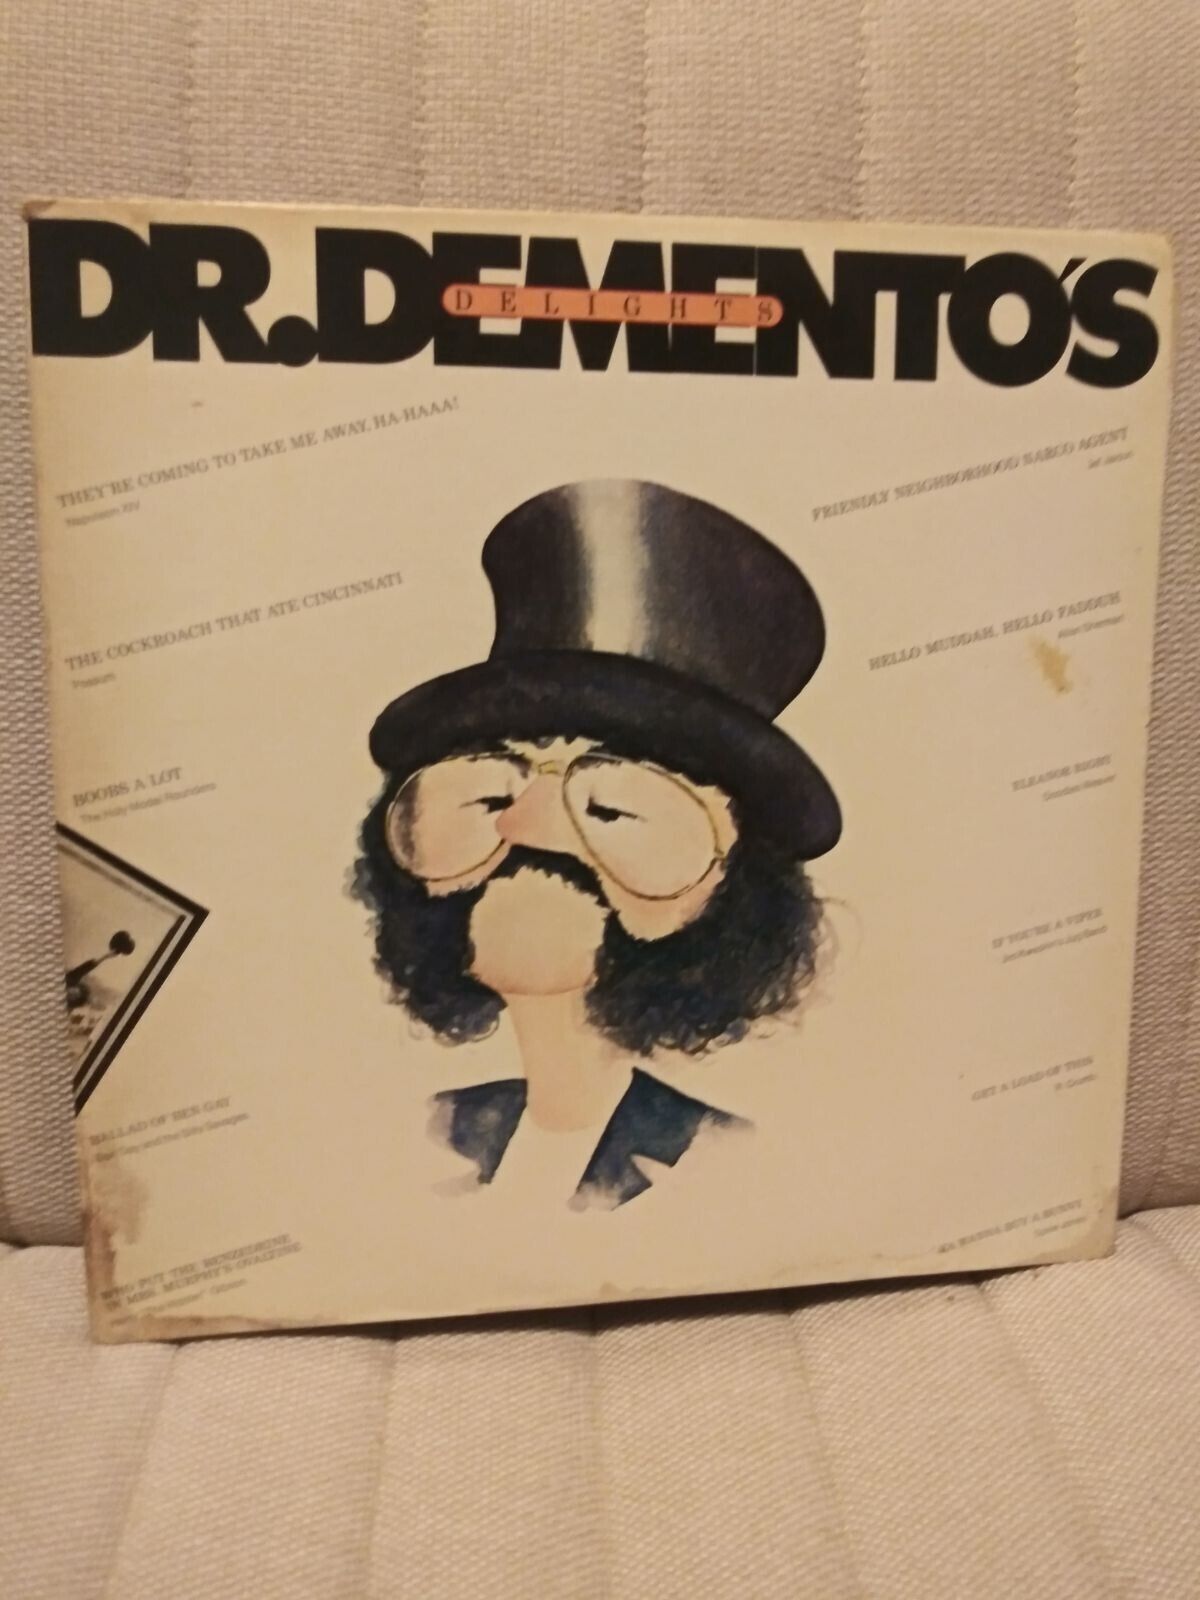 Dr. Demento 